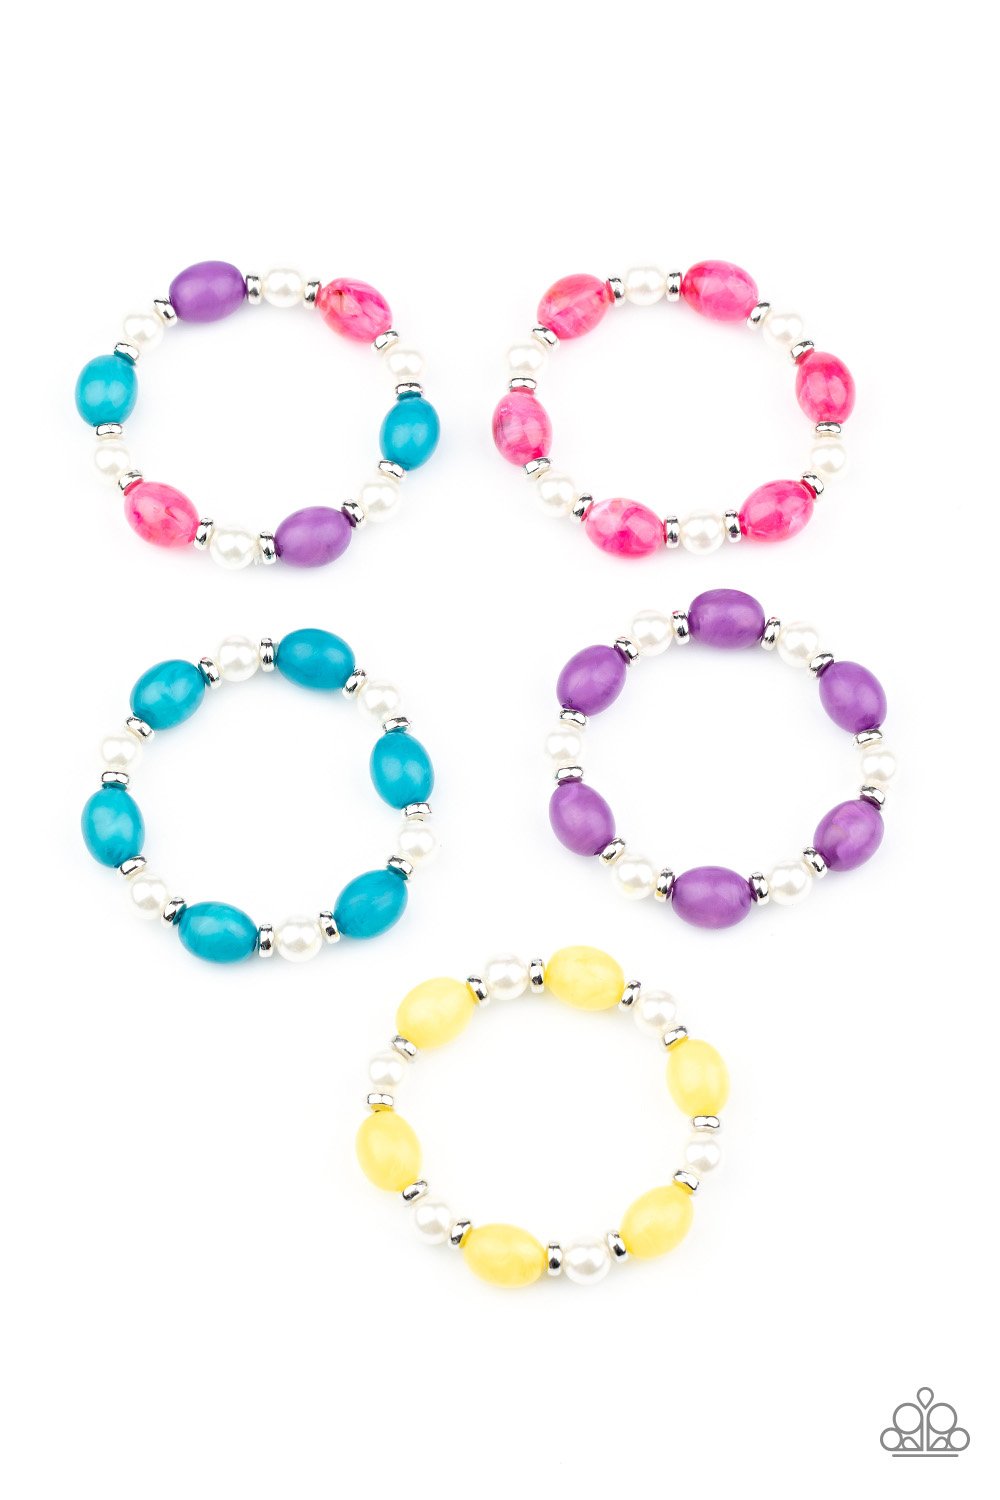 Starlet Shimmer Pearl & Colorful Bead Bracelet Kit♥ Starlet Shimmer Bracelets